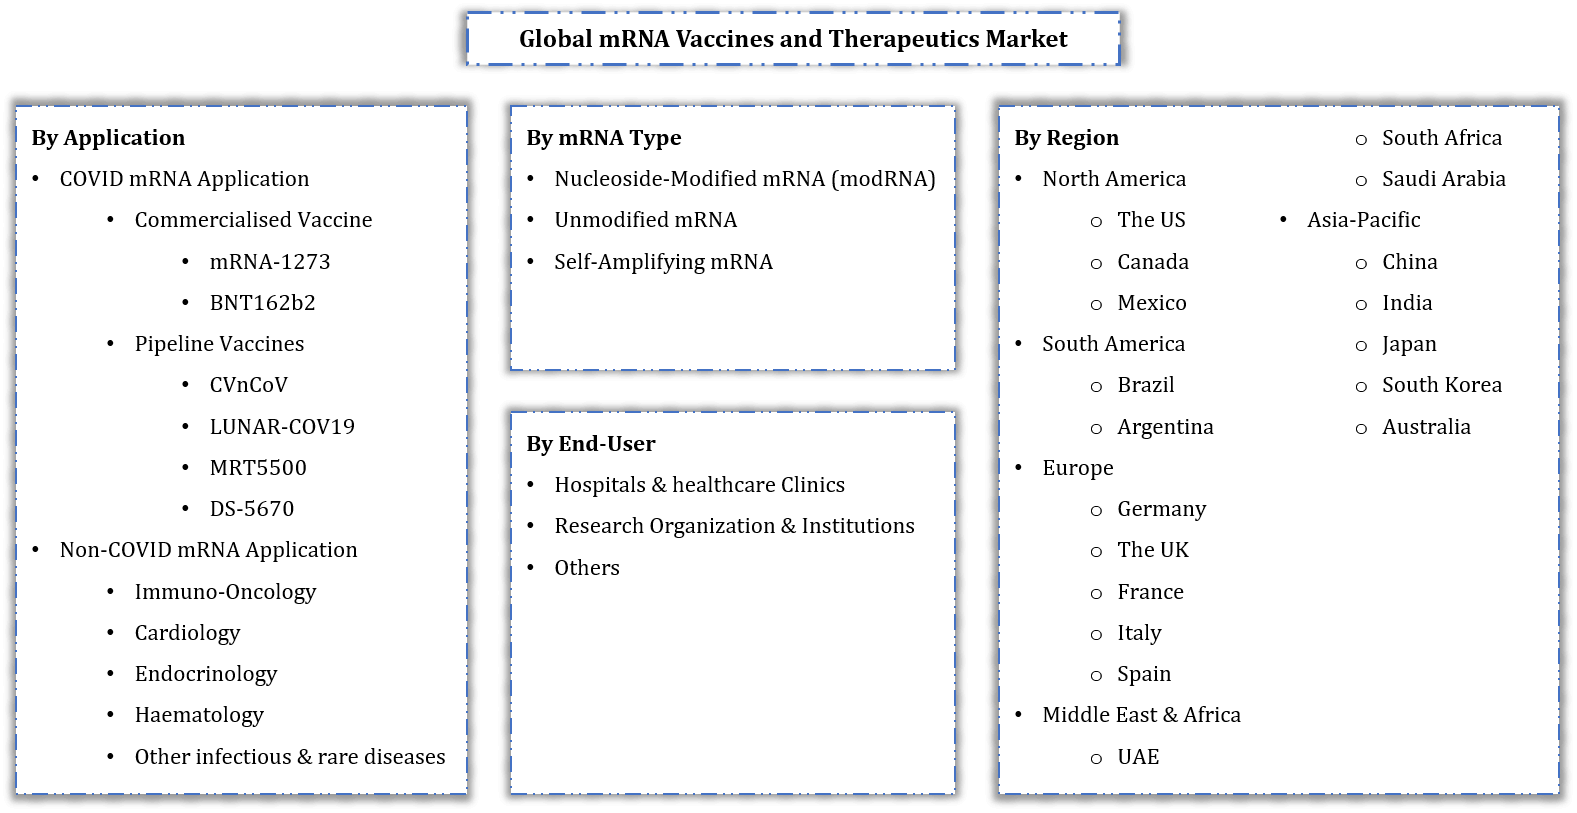 Global MRNA Vaccines And Therapeutics Market Segmentation